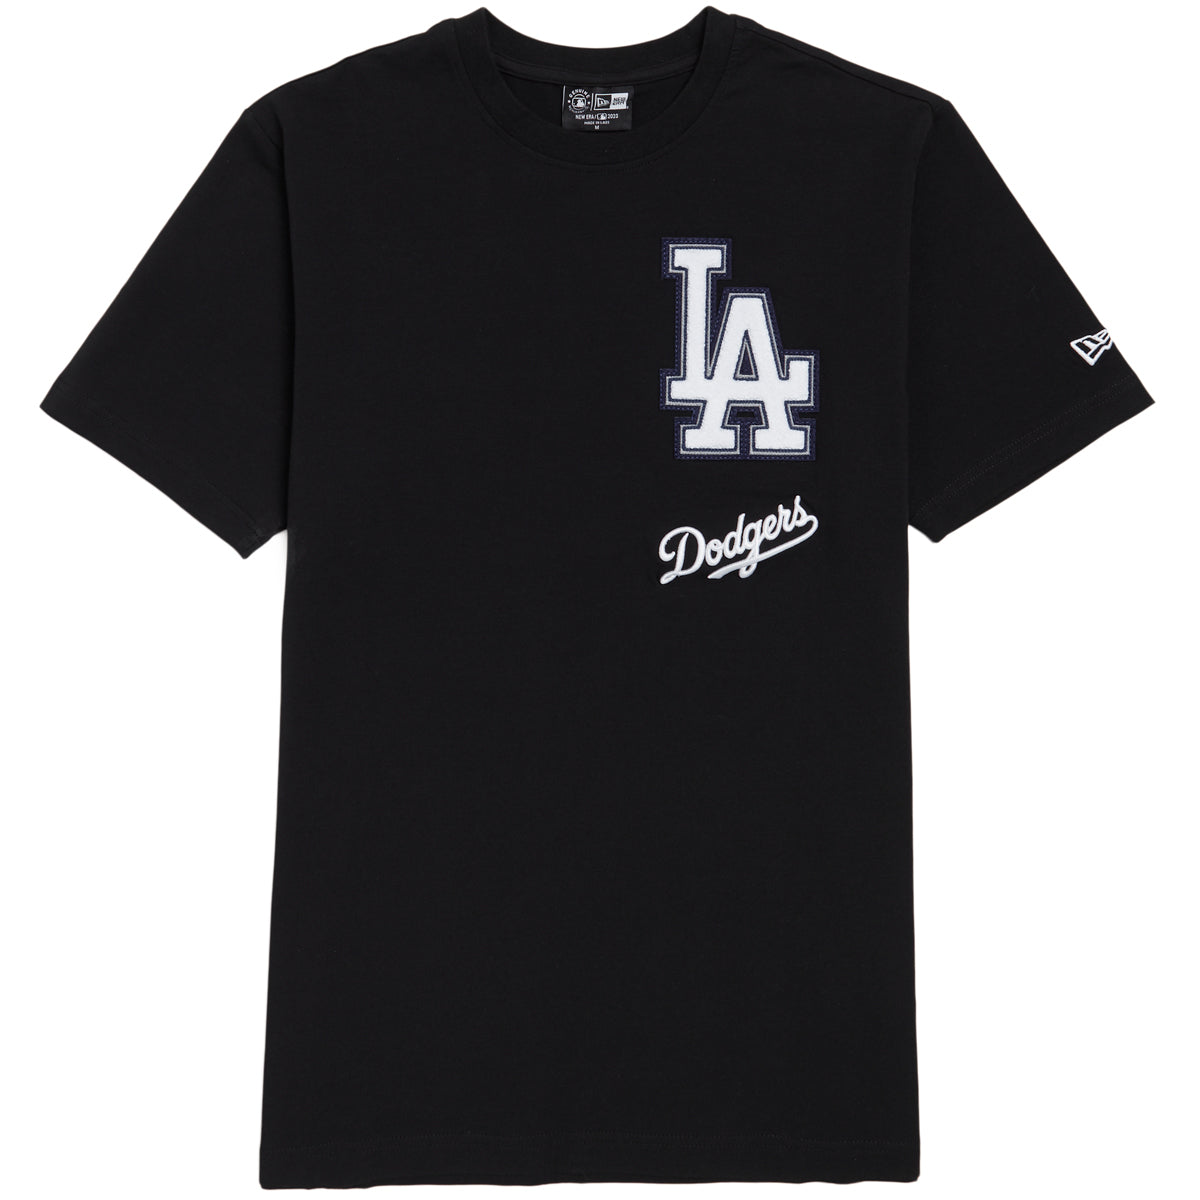 New Era Logo Select T-Shirt - Dodgers image 1